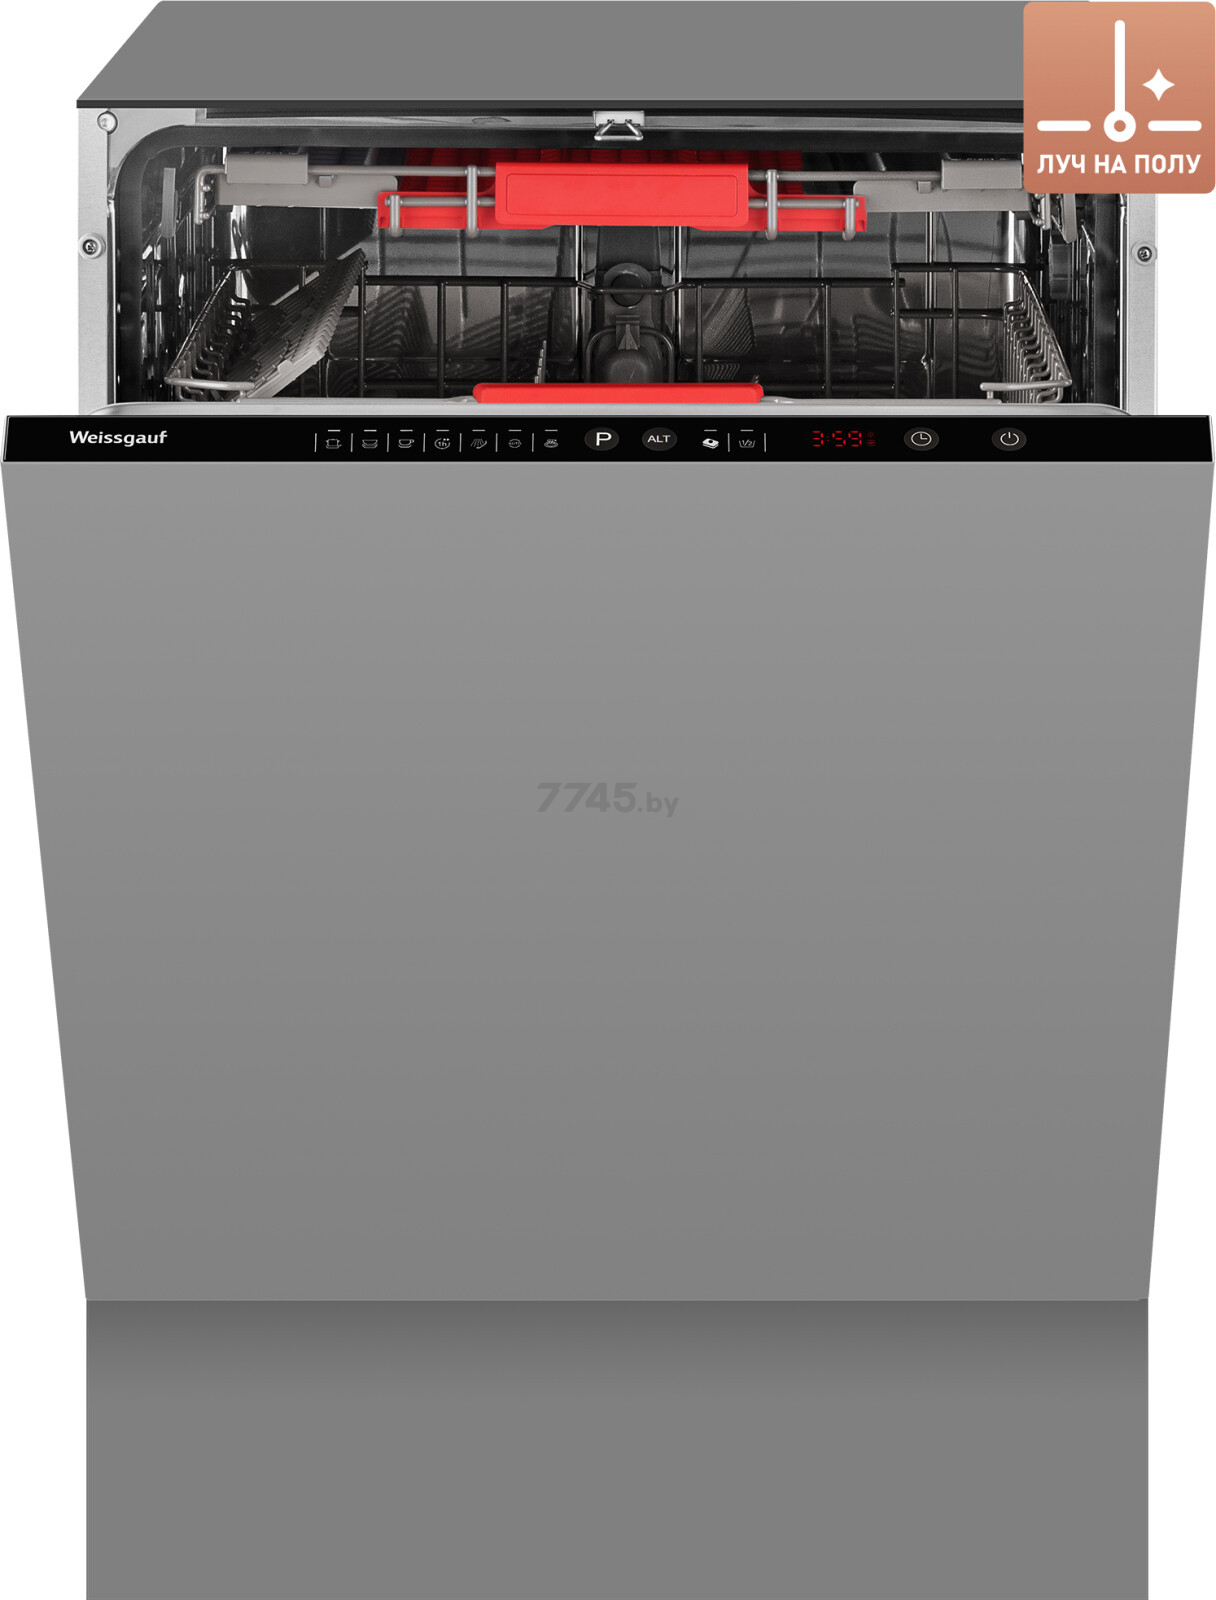 Машина посудомоечная встраиваемая WEISSGAUFF BDW 6036 D Infolight (BDW6036DInfolight)